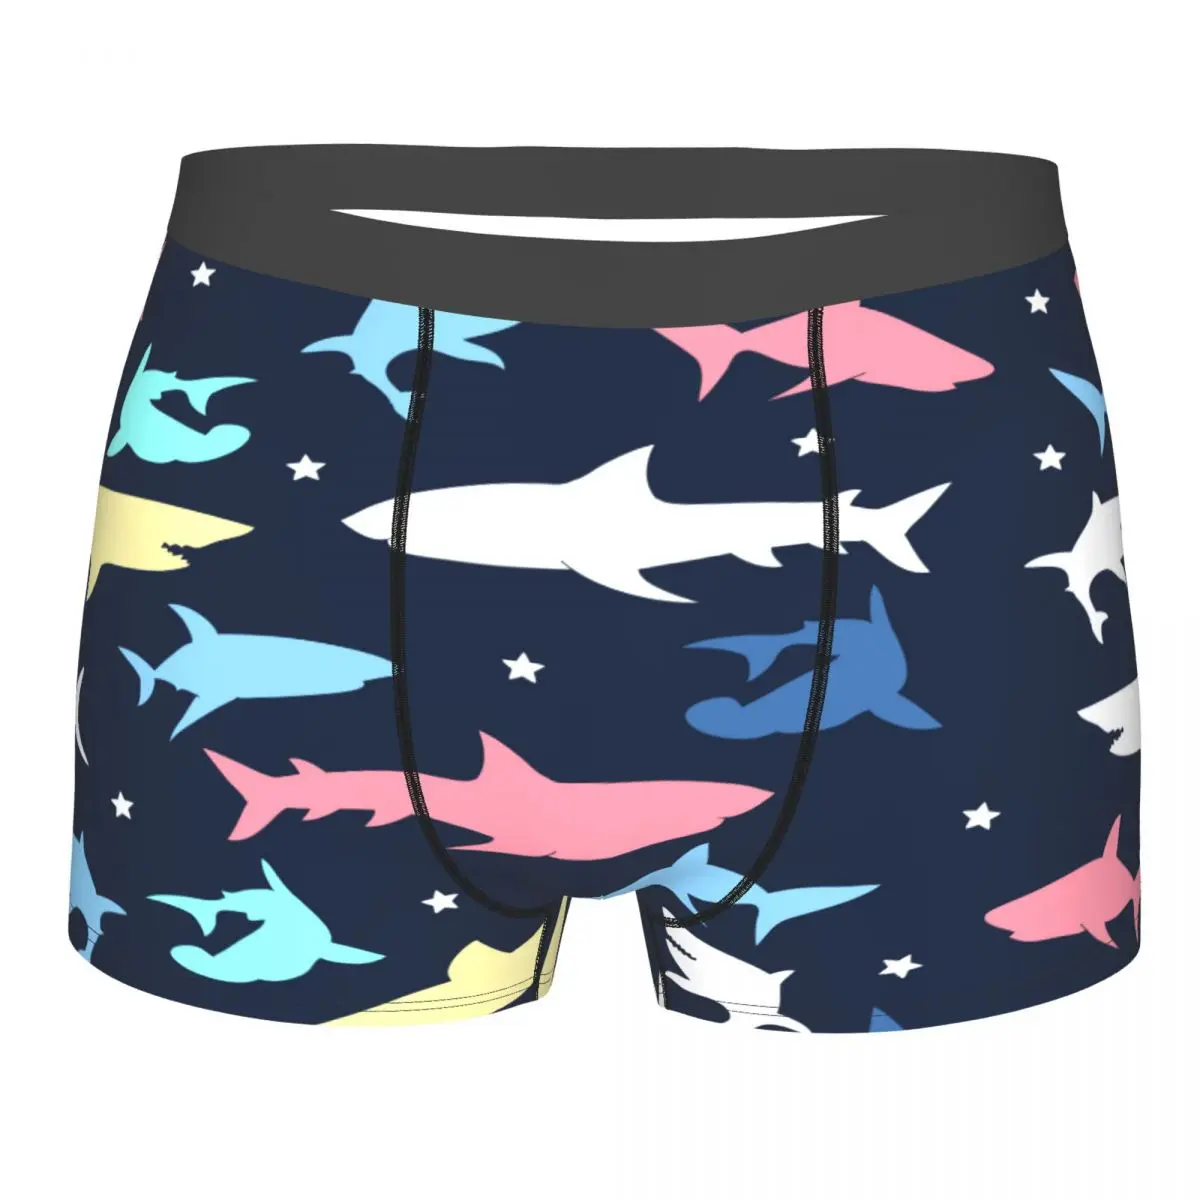 Boxer Men Shorts Underwear Male Colorful Cute Shark Print Boxershorts Panties Underpants Man Sexy